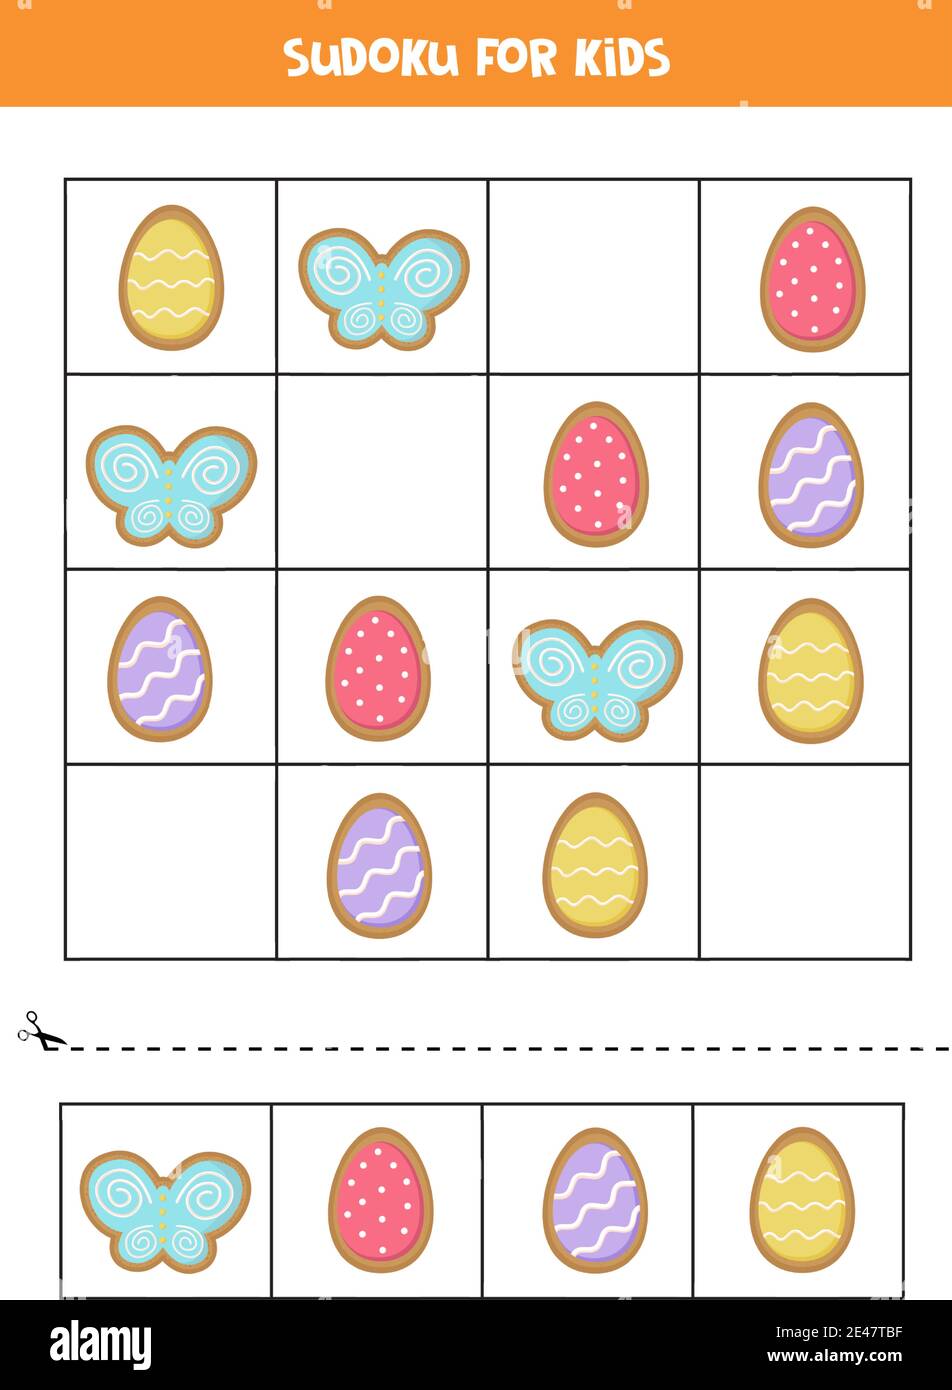 Rompecabezas Sudoku con bonitas galletas de Pascua. Juego lógico para niños  Imagen Vector de stock - Alamy